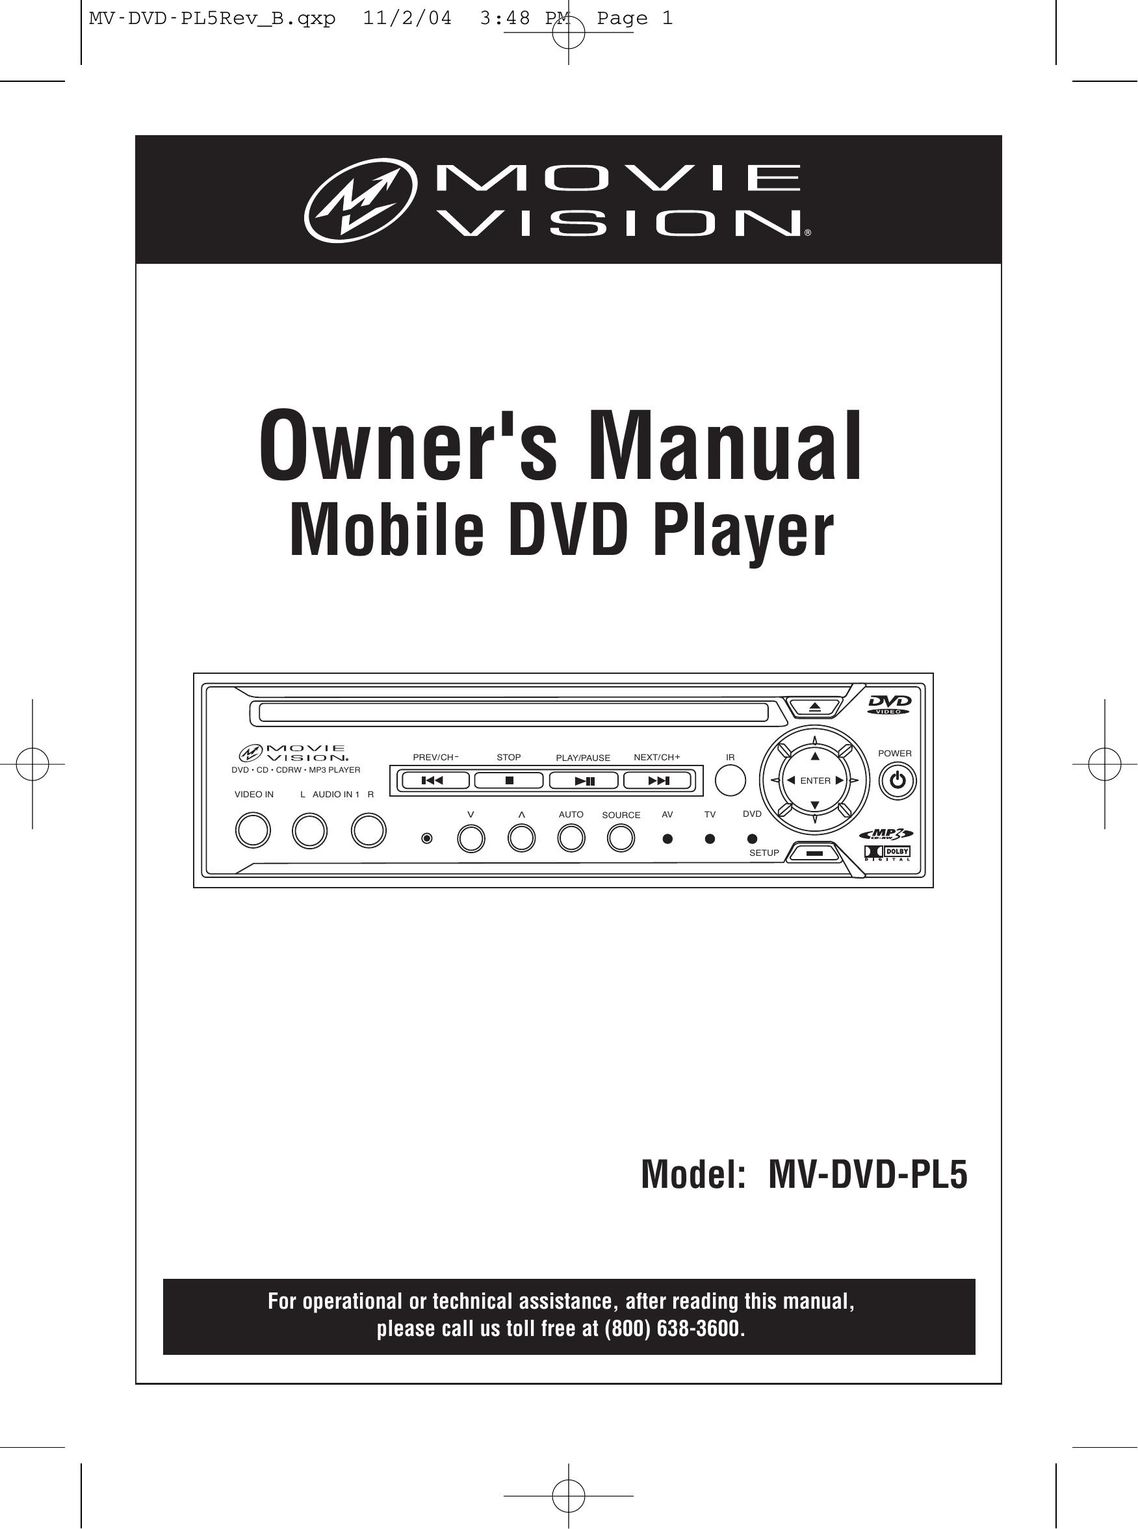 Magnadyne MV-DVD-PL5 DVD Player User Manual